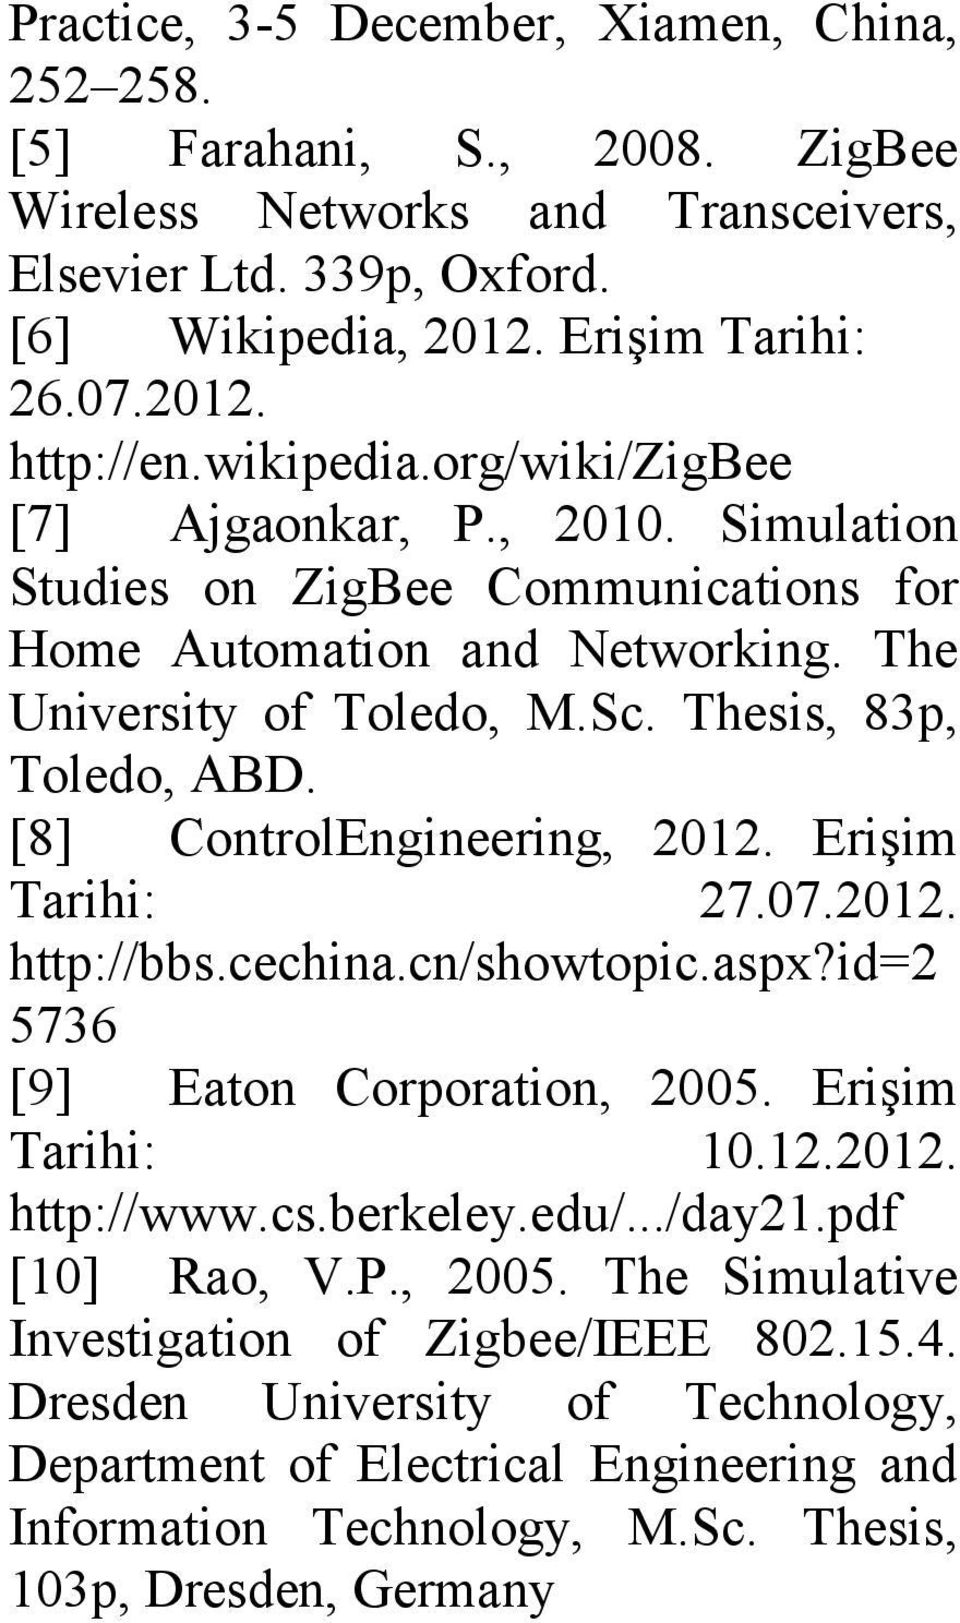 [8] ControlEngineering, 2012. Erişim Tarihi: 27.07.2012. http://bbs.cechina.cn/showtopic.aspx?id=2 5736 [9] Eaton Corporation, 2005. Erişim Tarihi: 10.12.2012. http://www.cs.berkeley.edu/.../day21.